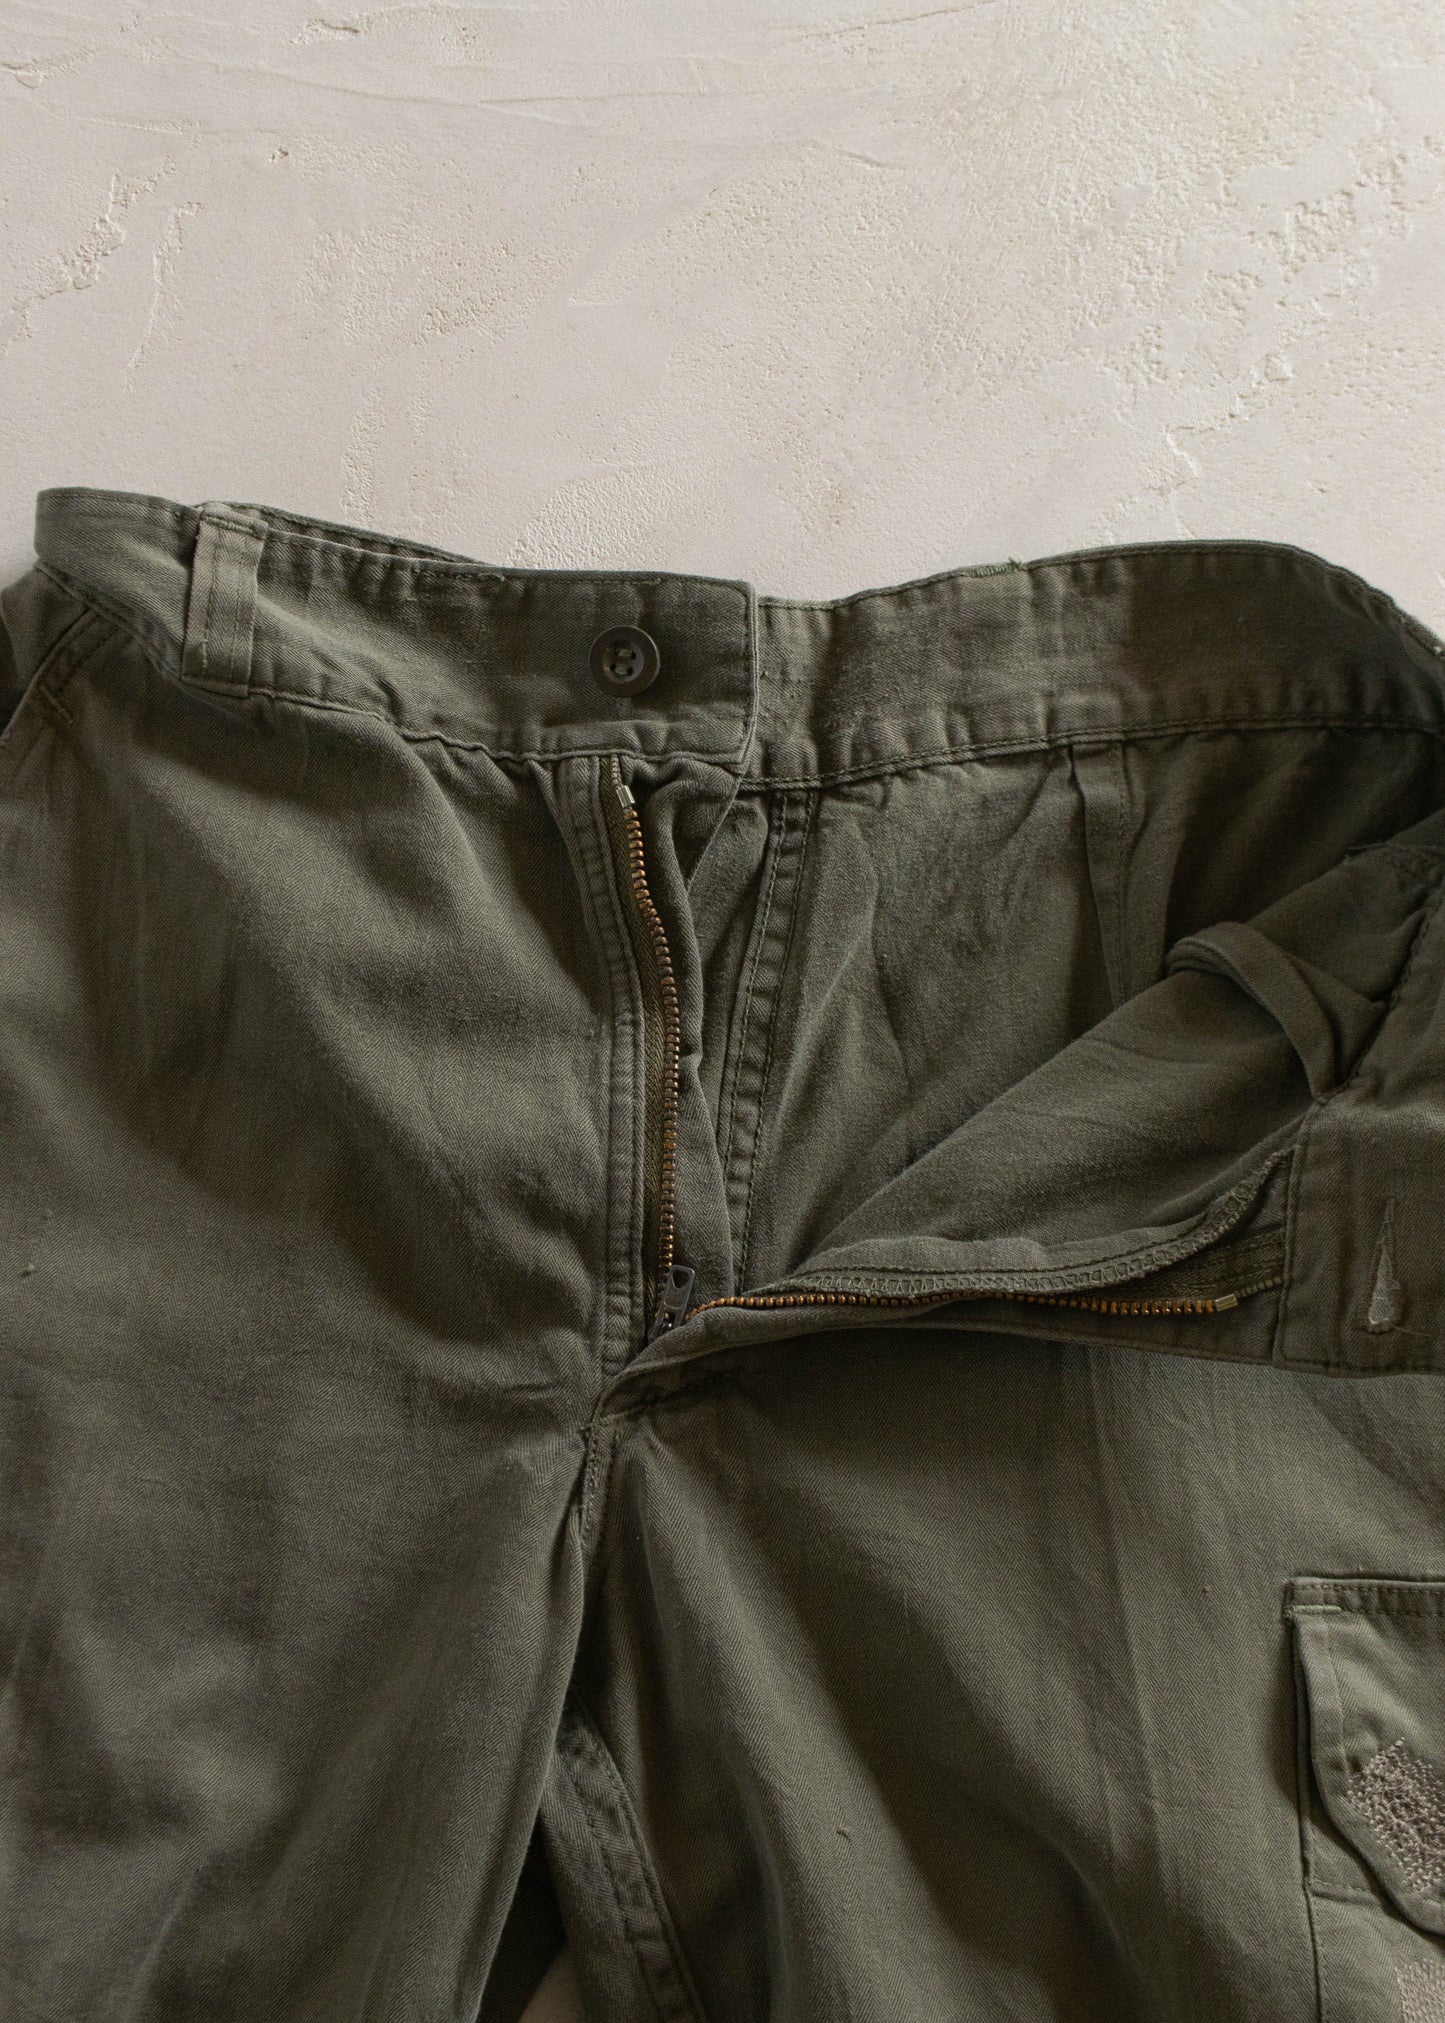 1970s HBT French Military Cargo Pants Size Women's 25 Men's 28